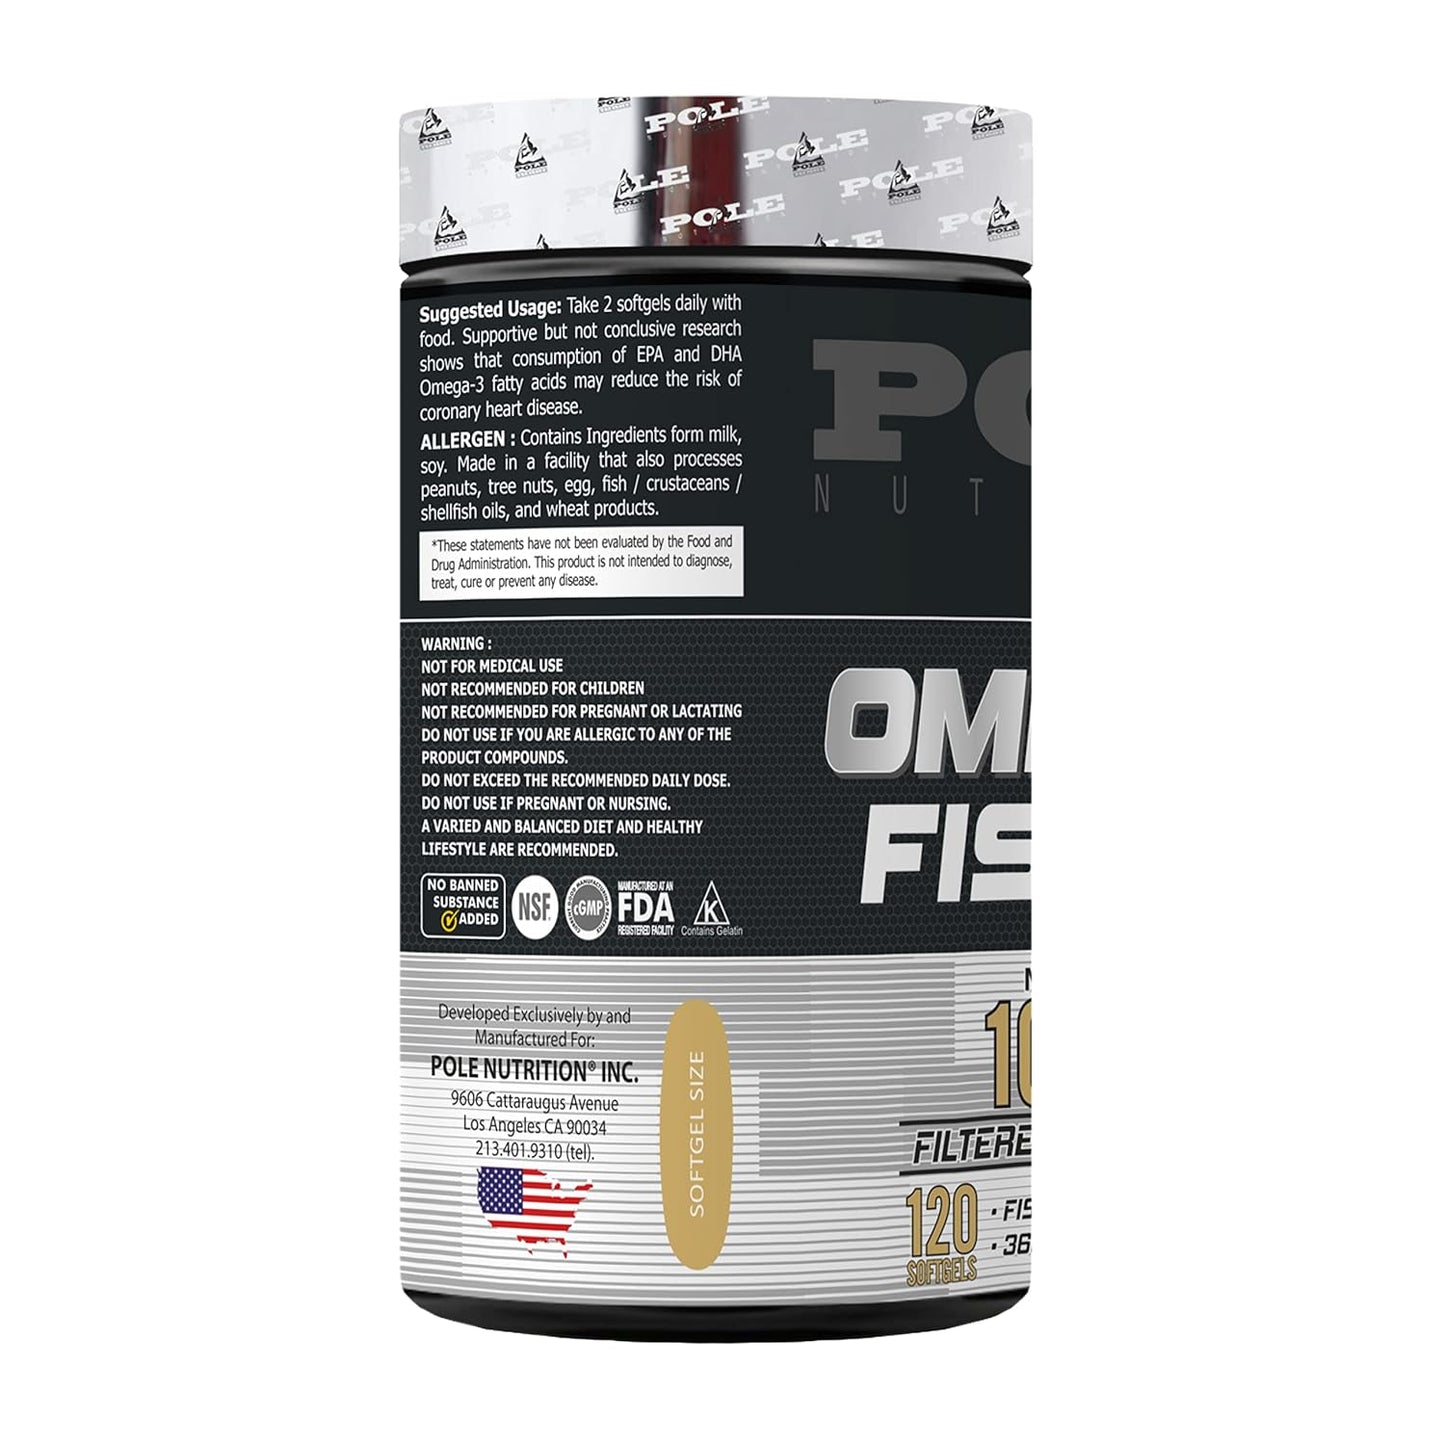 Pole Nutrition Omega-3 Fish Oil 1000mg - 120 Softgels